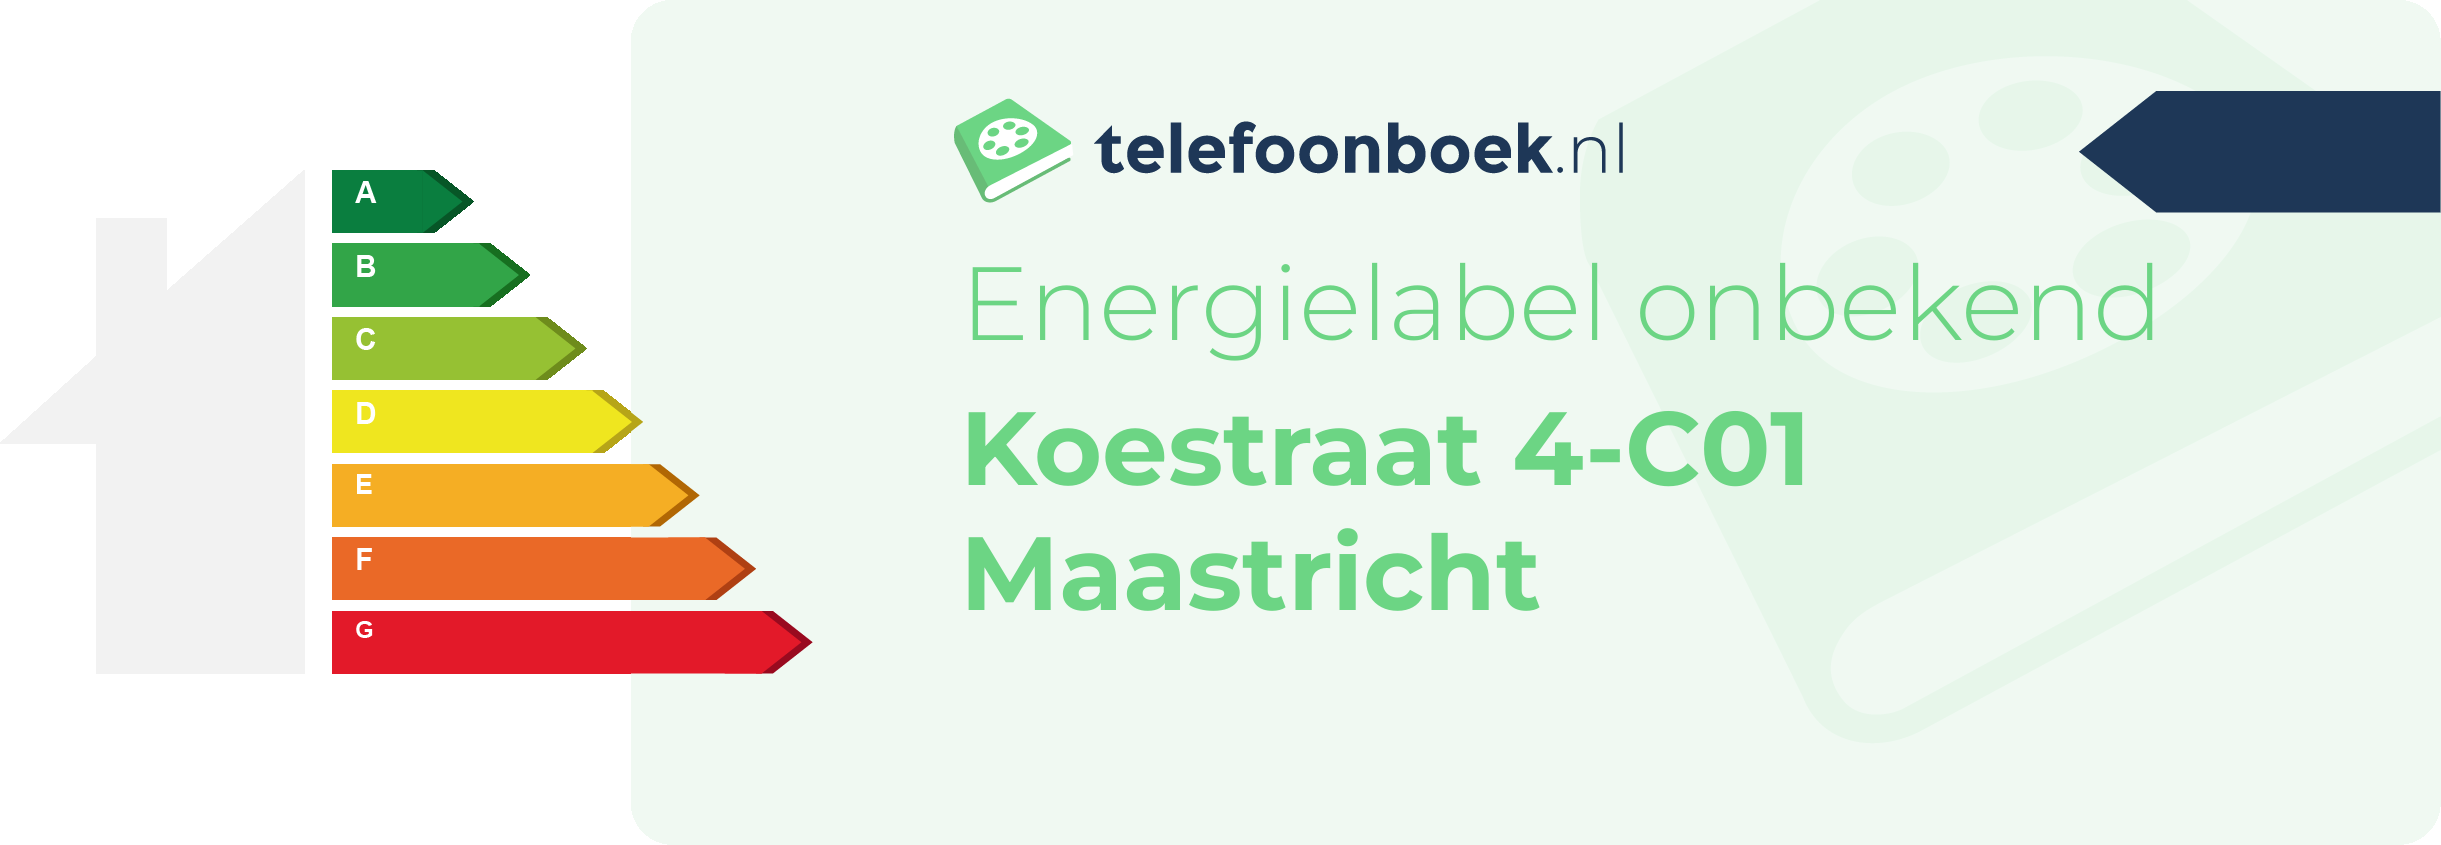 Energielabel Koestraat 4-C01 Maastricht